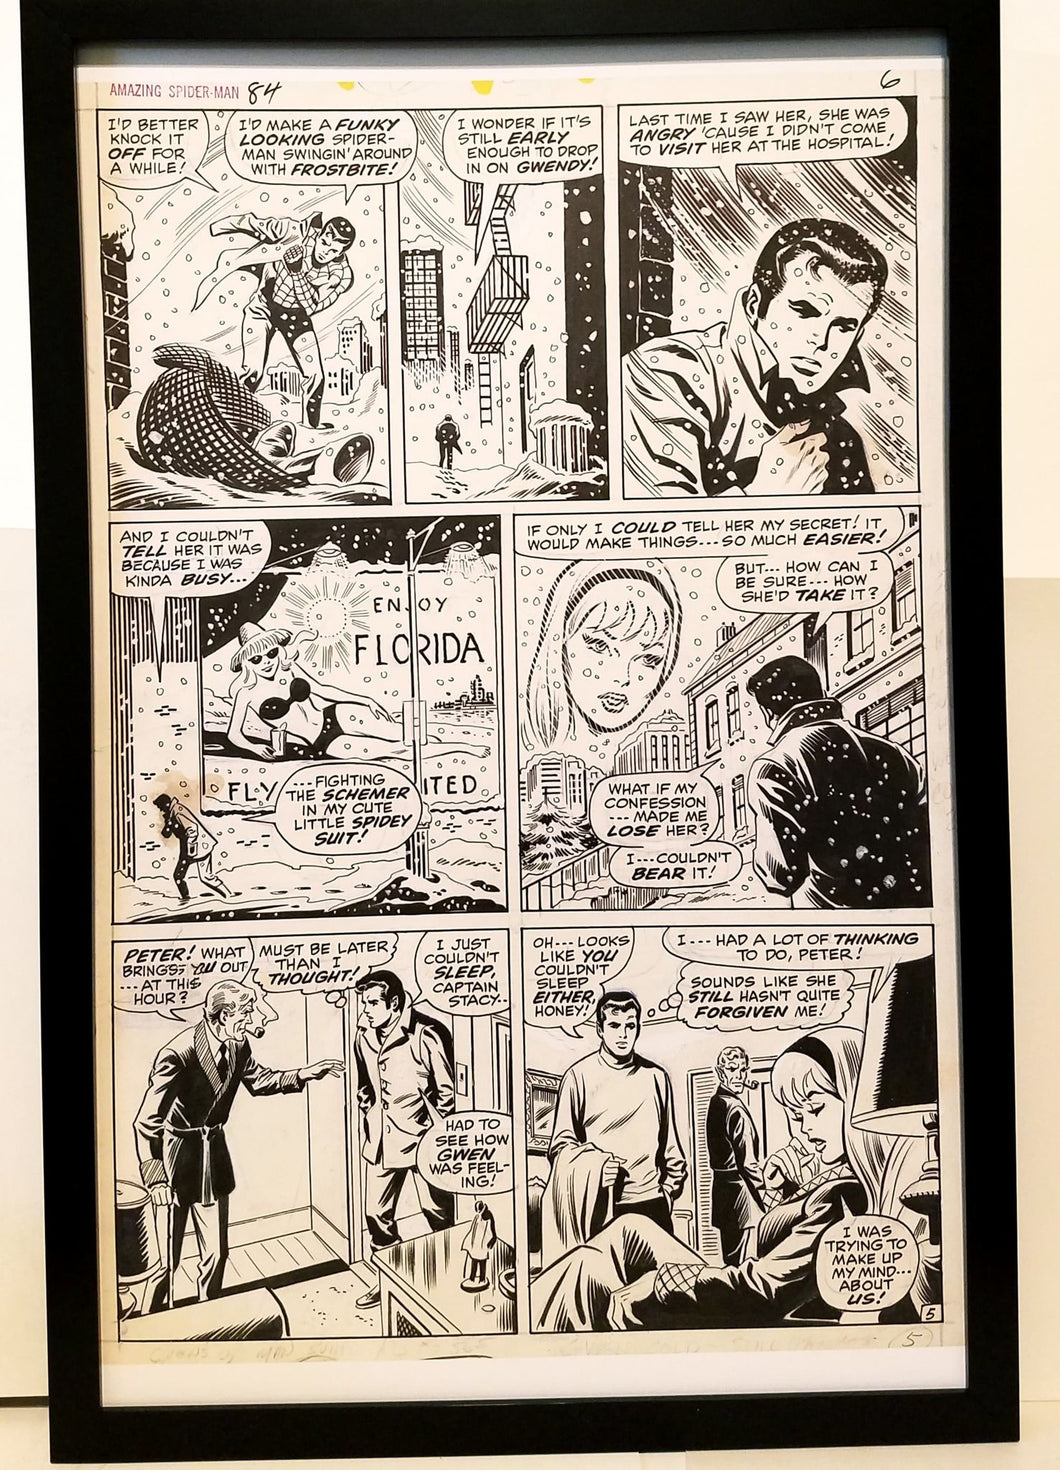 Amazing Spider-Man #84 pg. 5 11x17 FRAMED Original Art Poster Marvel Comics